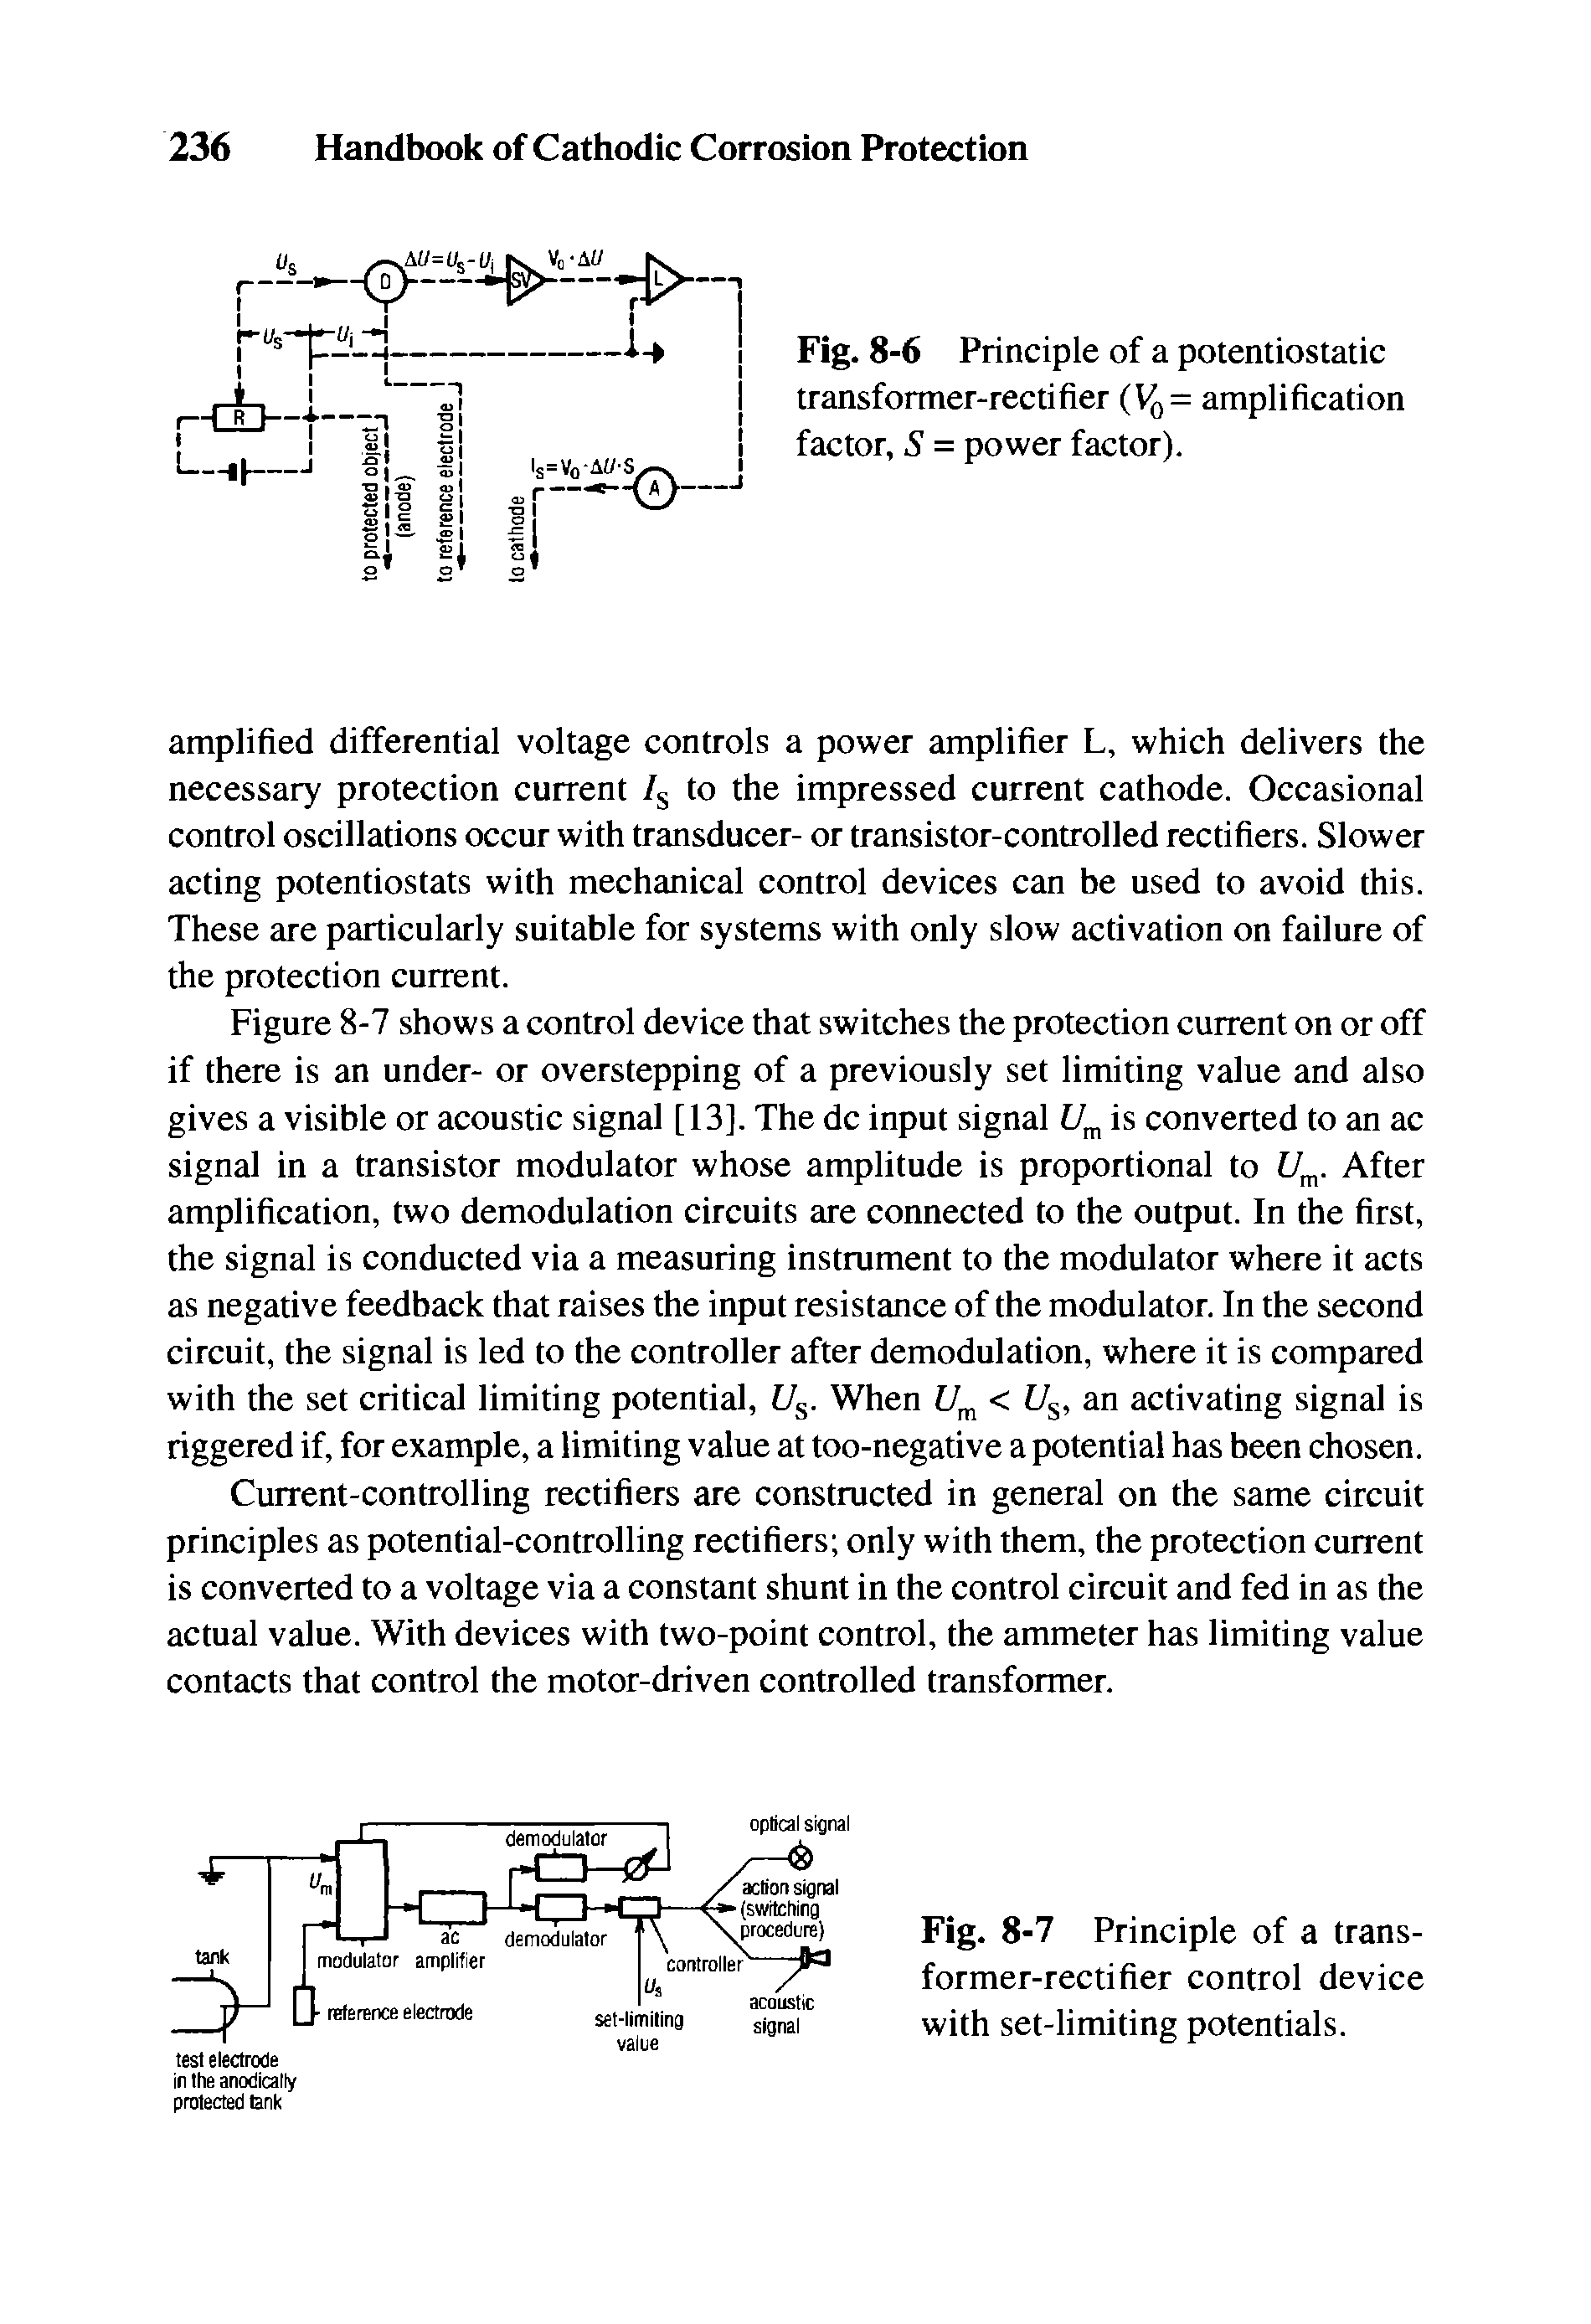 Fig. 8-6 Principle of a potentiostatic transformer-rectifier (Vq = amplification factor, S = power factor).